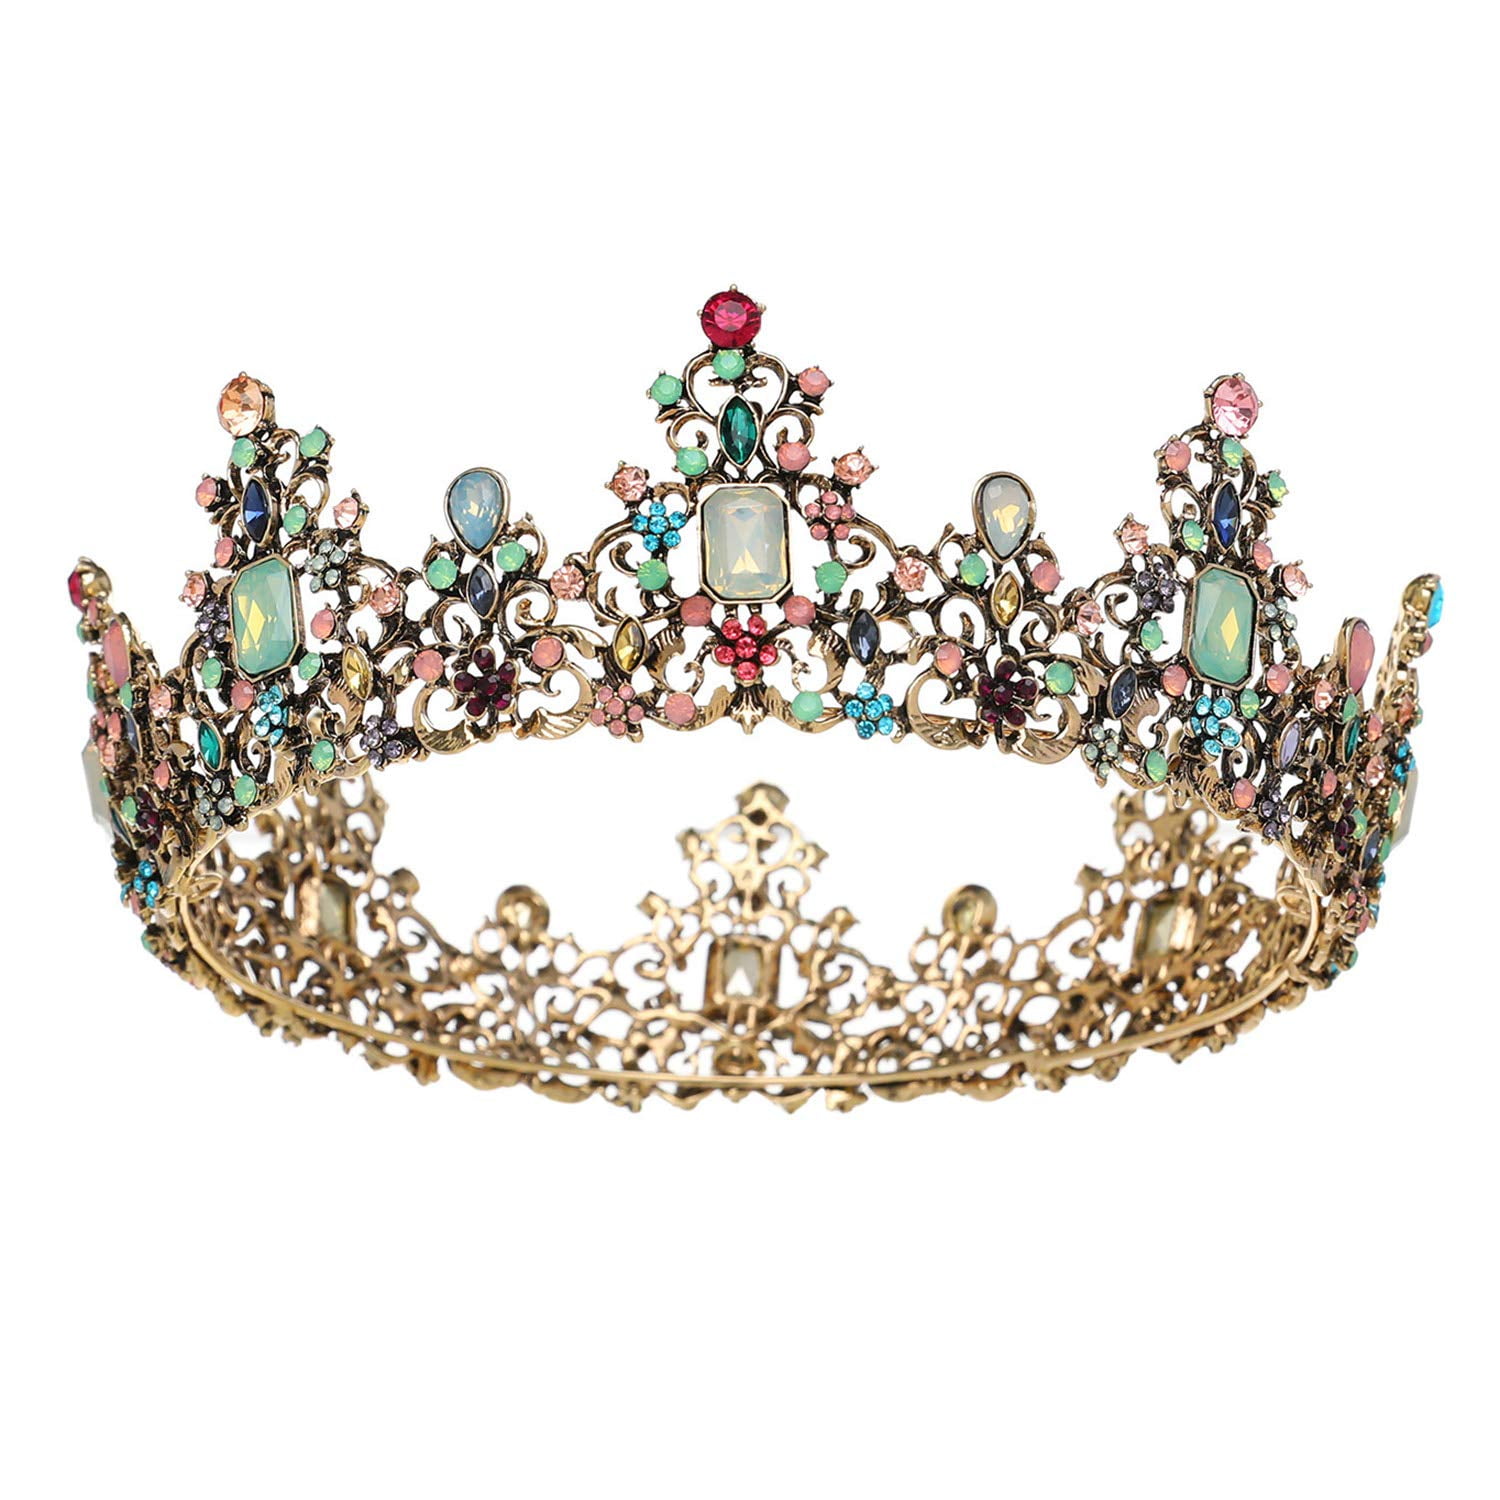 Baroque Ladies Embellished Headband Crystal Hair Crown Tiara Wedding Show Party 